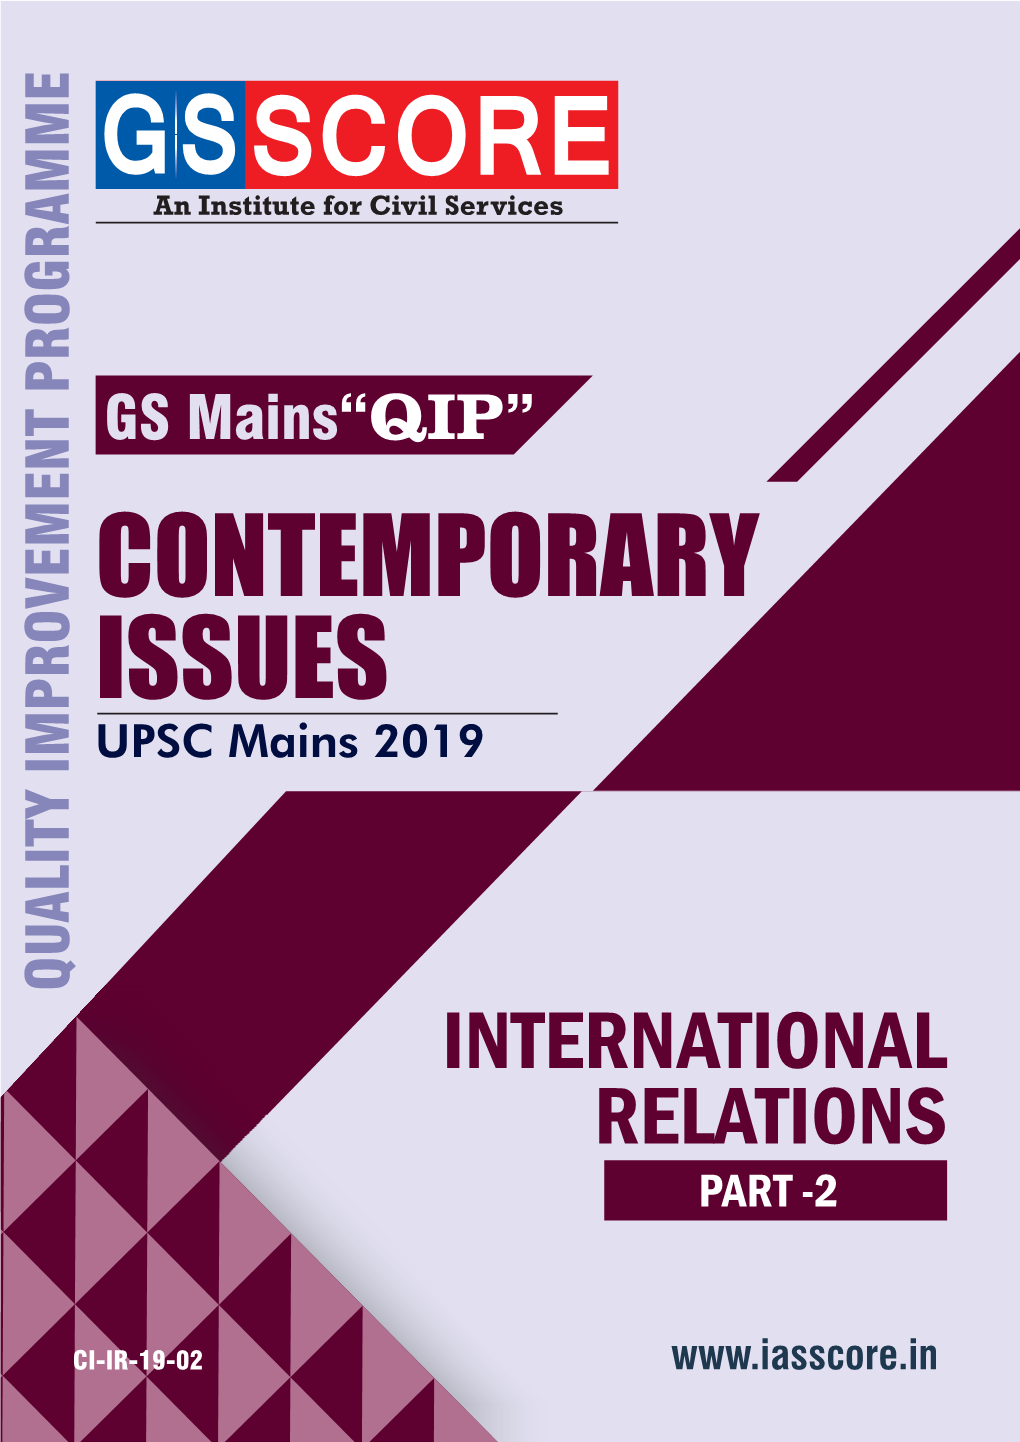 QIP International Relations Part